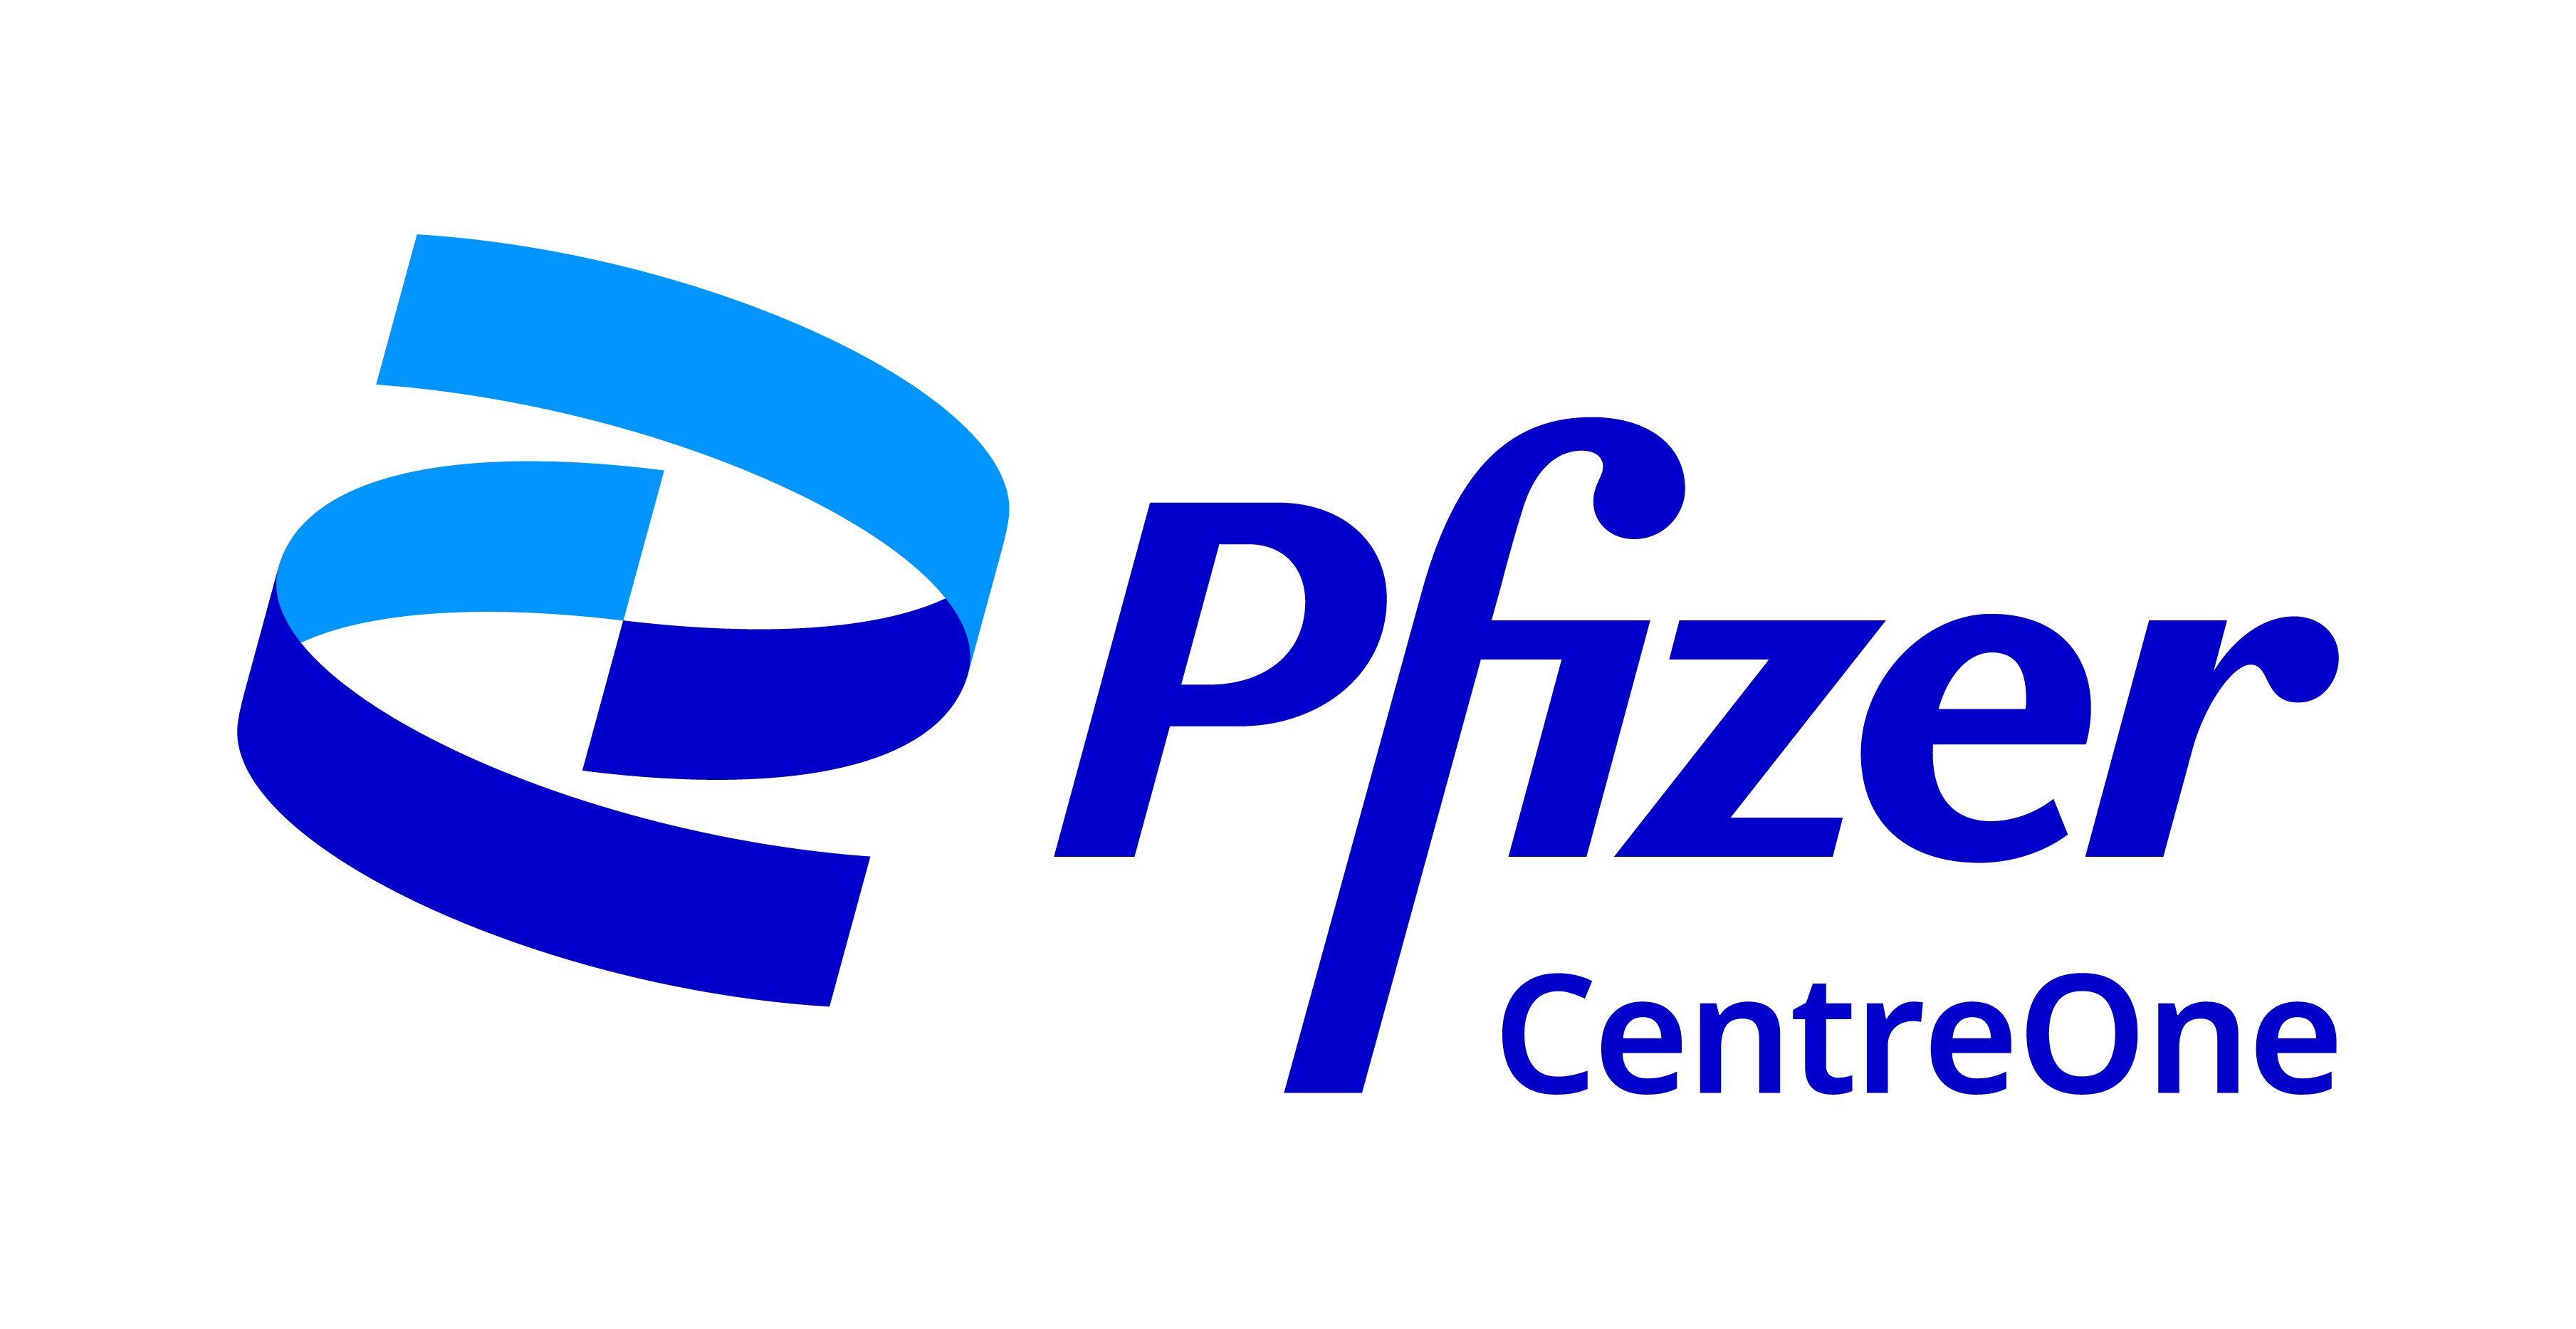 Pfizer CentreOne®